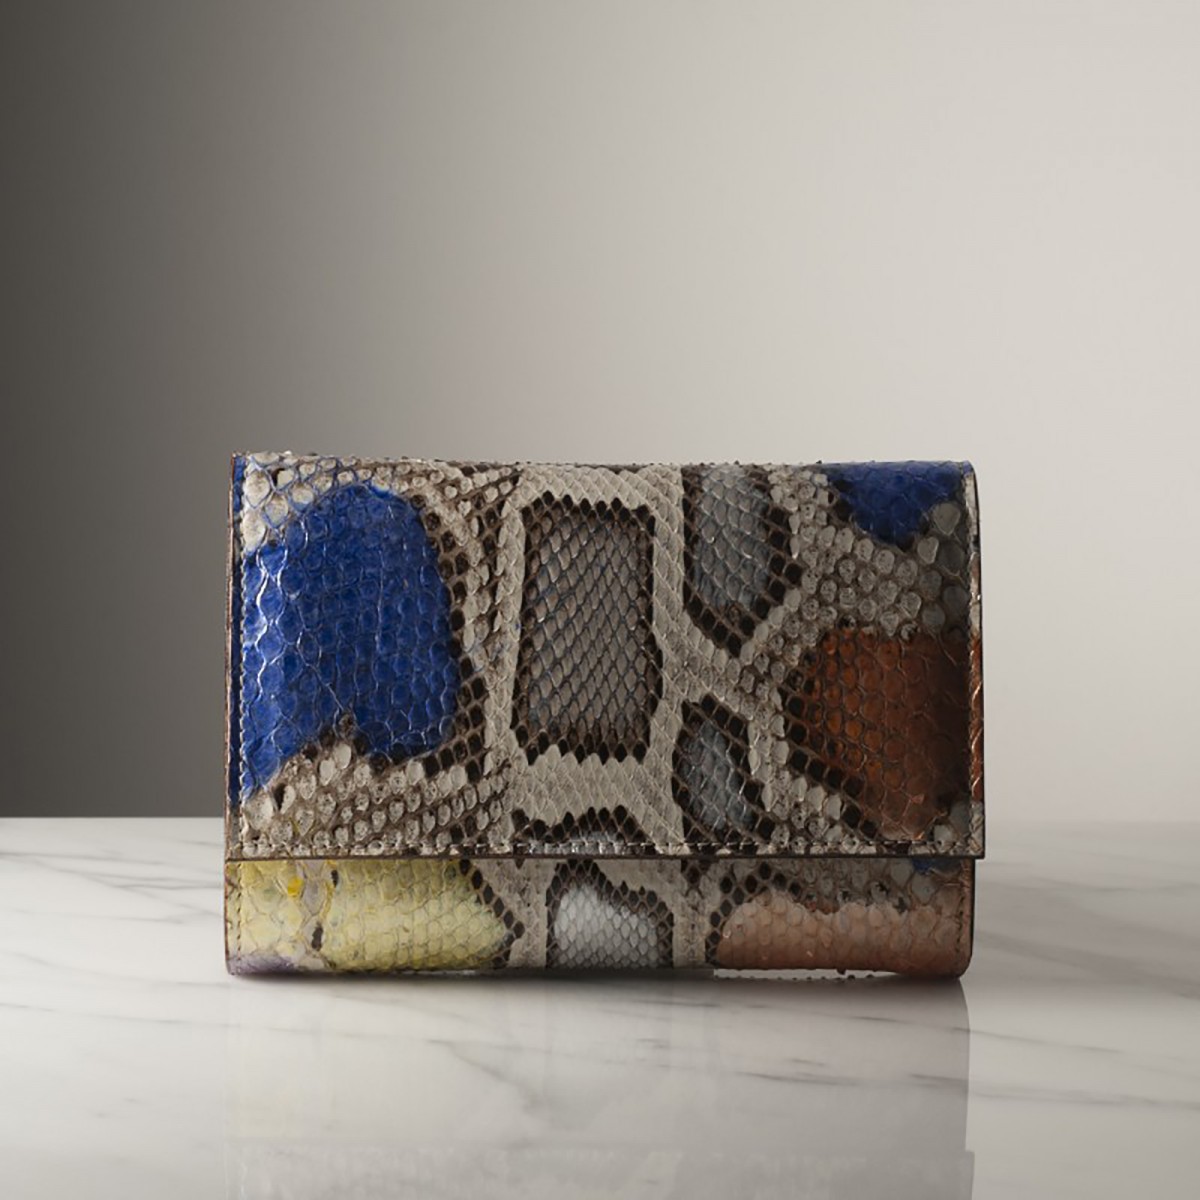 HENRIETTE PYTHON - Python leather wallet, handmade in Italy